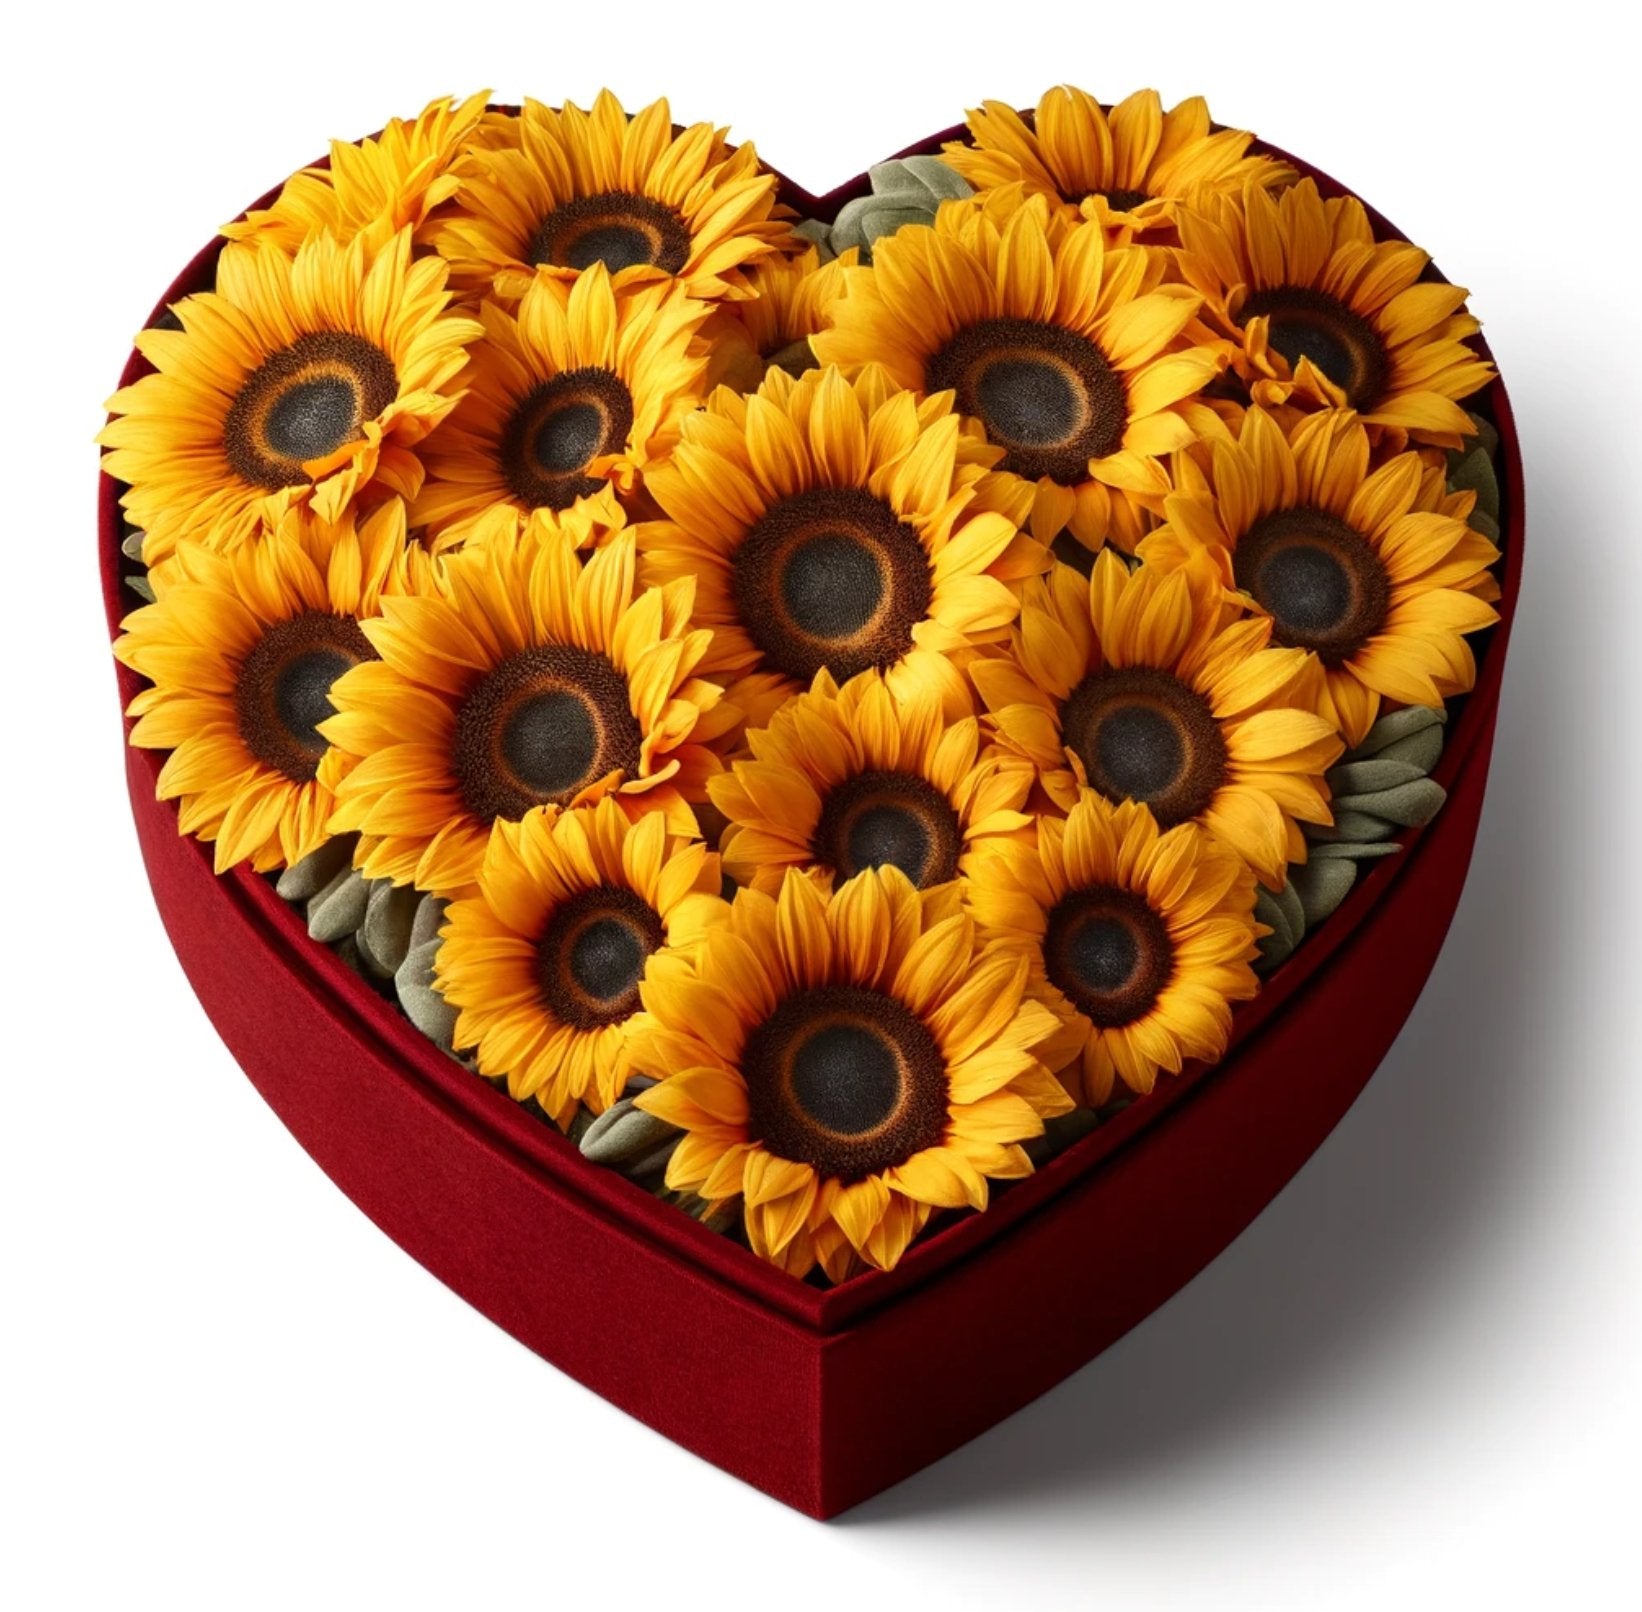 Red Velvet Heart Box with Preserved Sunflowers. - Imaginary Worlds